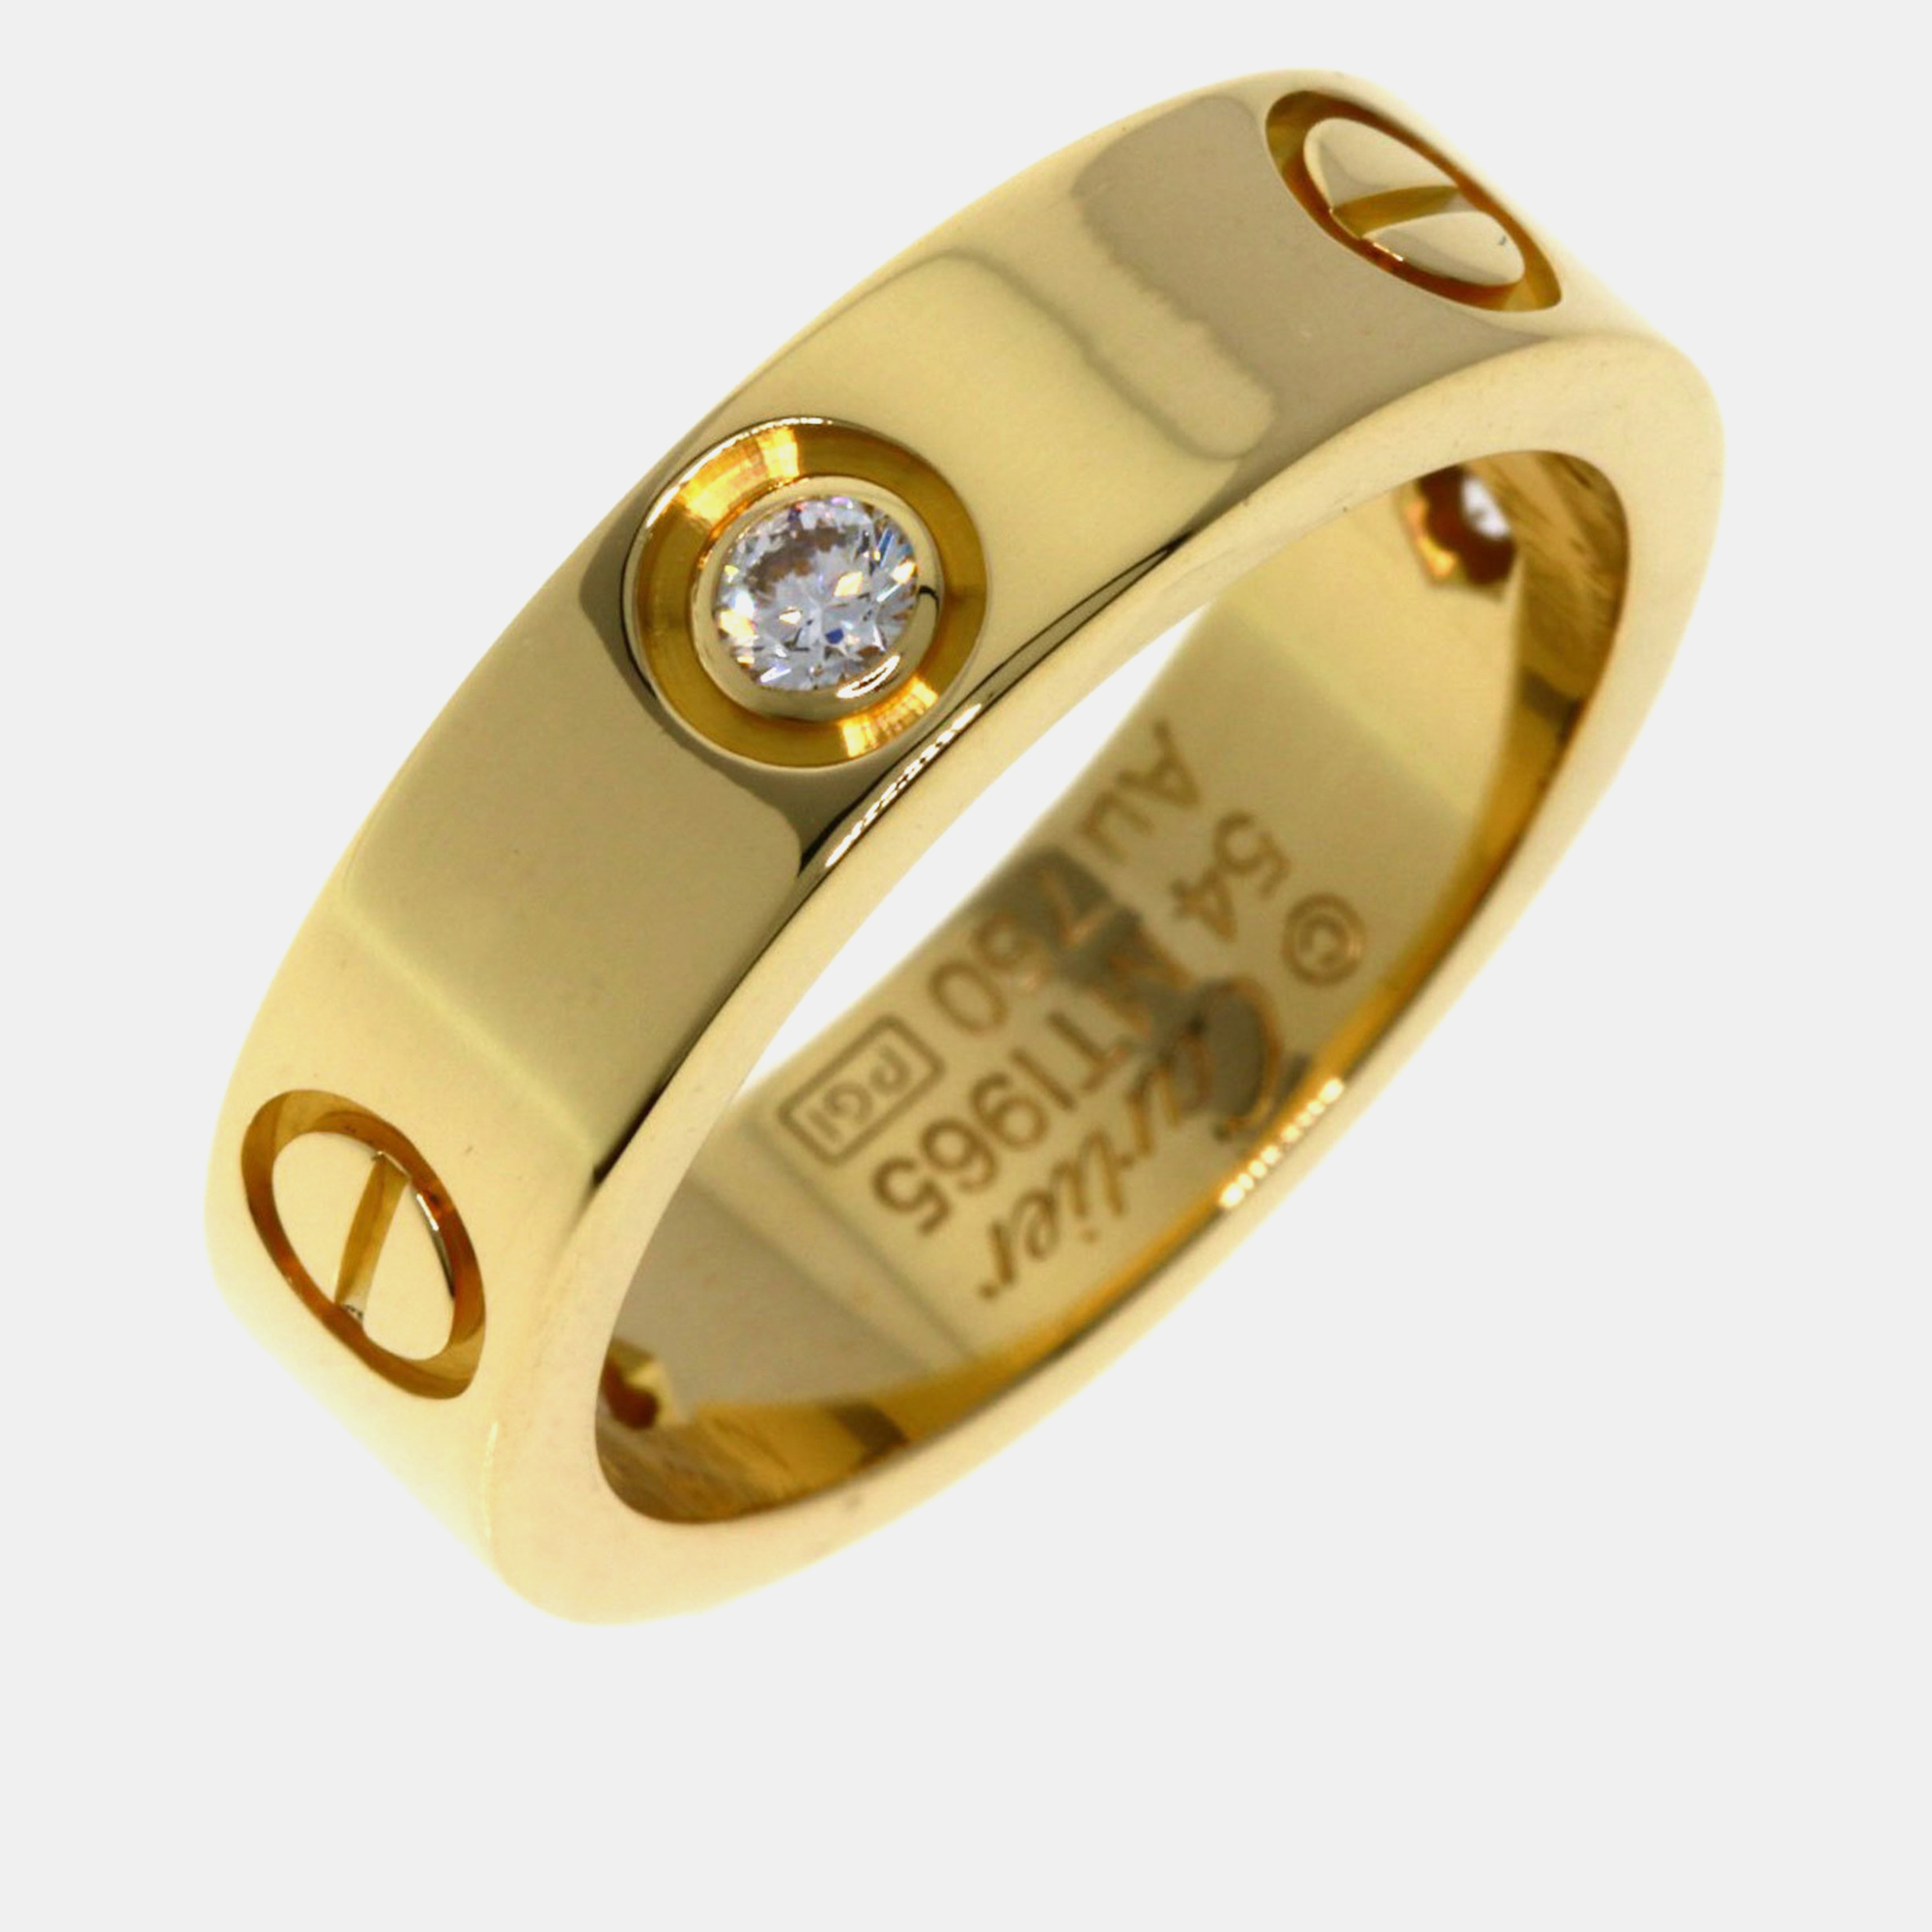 Cartier 18k yellow gold and diamond love band ring eu 54